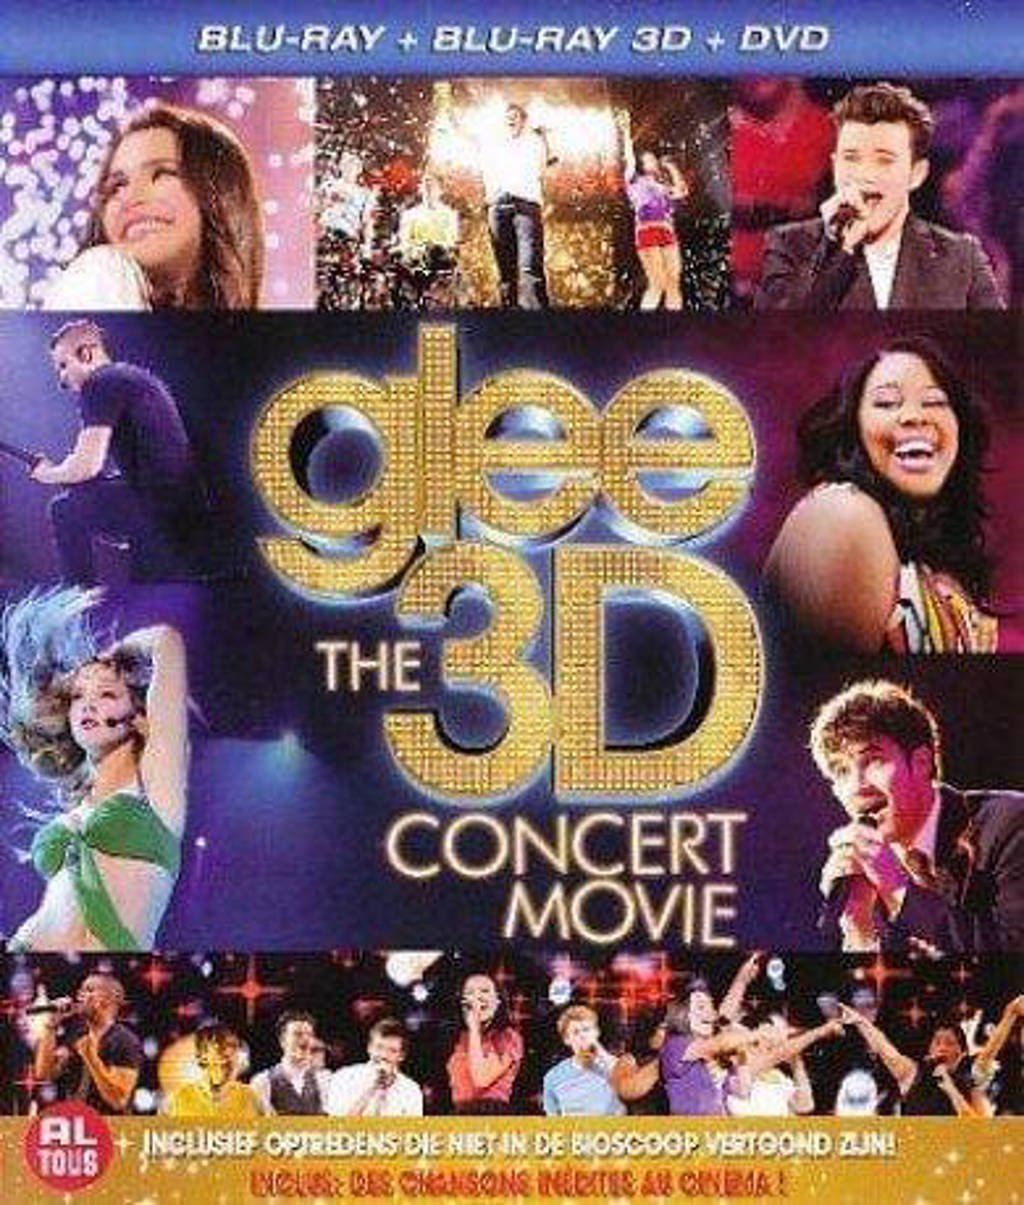 Glee club concert movie torrents pianta catastale storica national geographic torrent